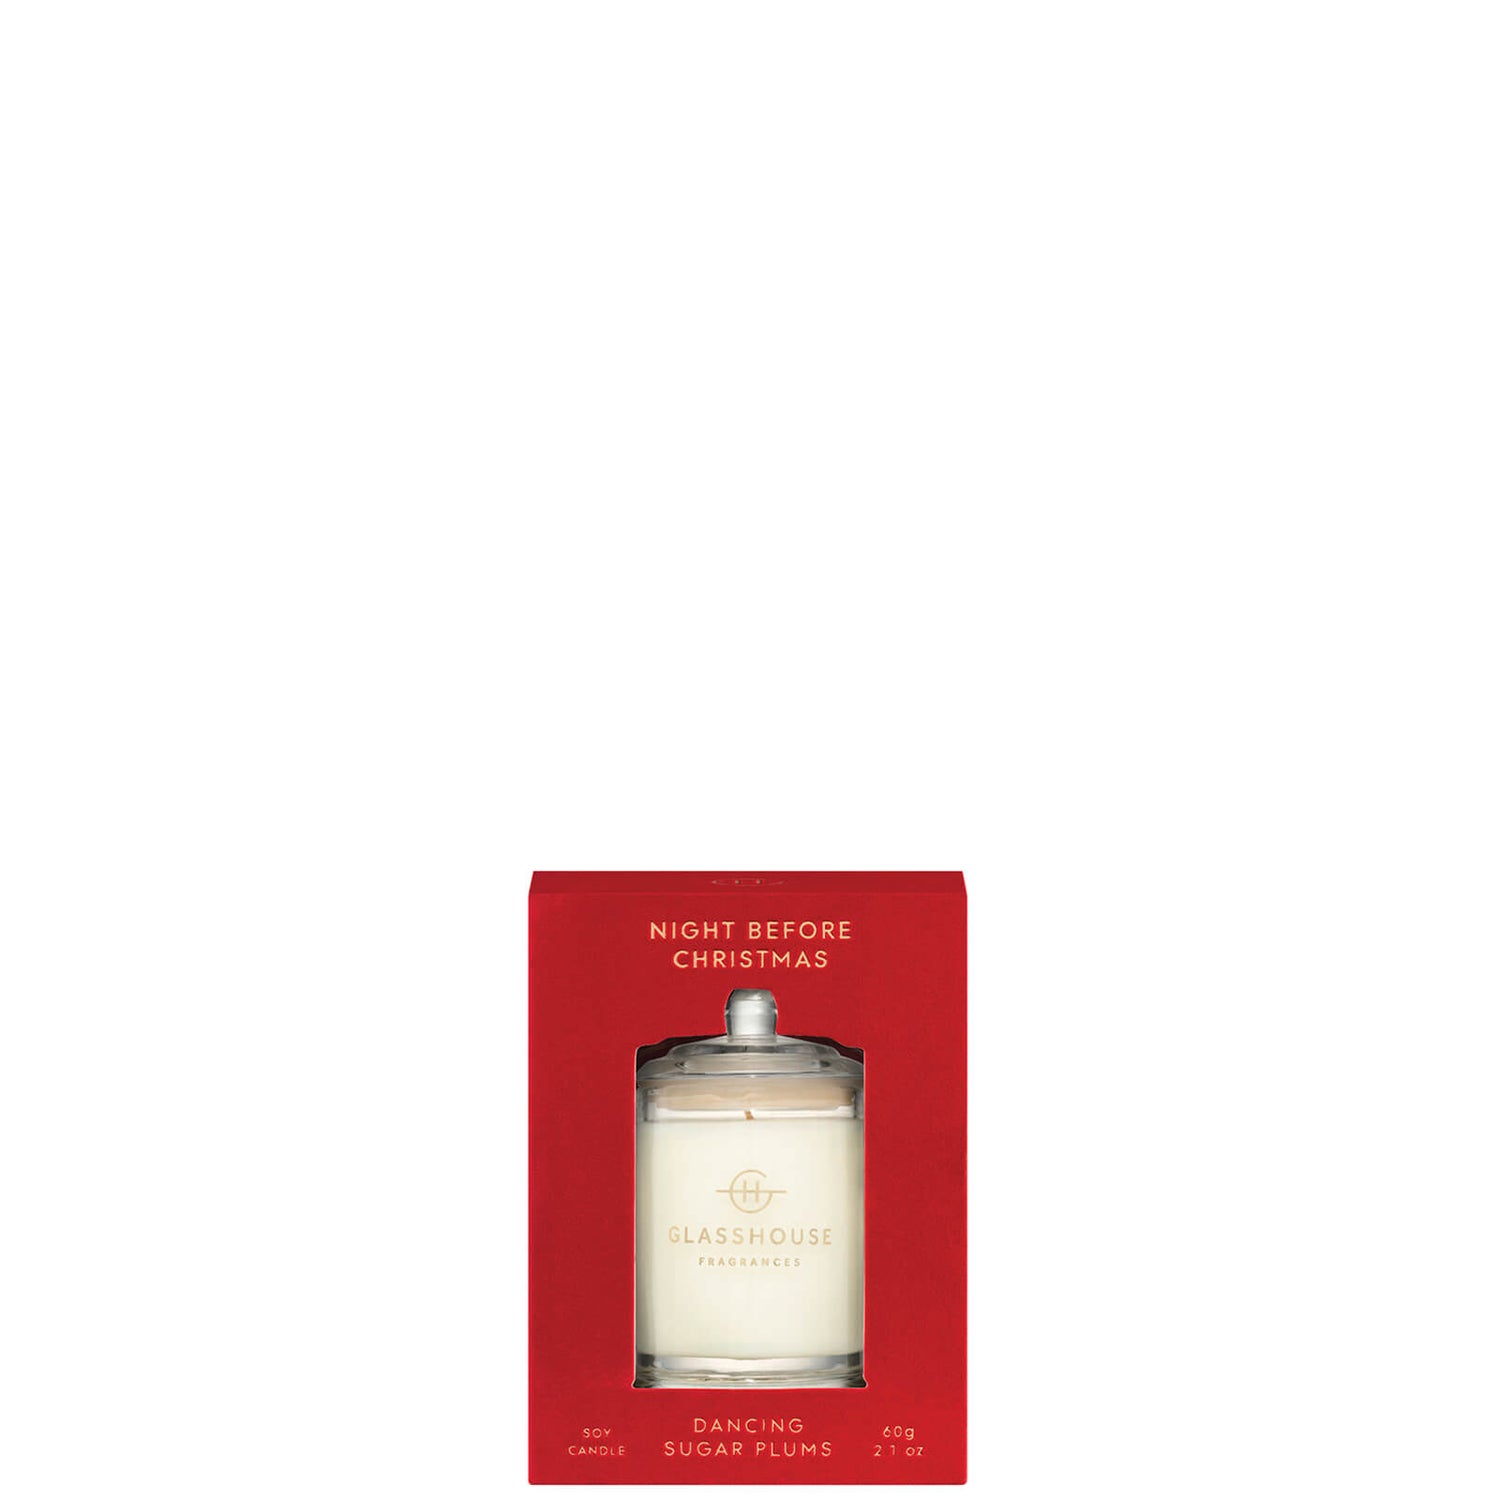 Glasshouse Fragrances Night Before Christmas 60g Candle